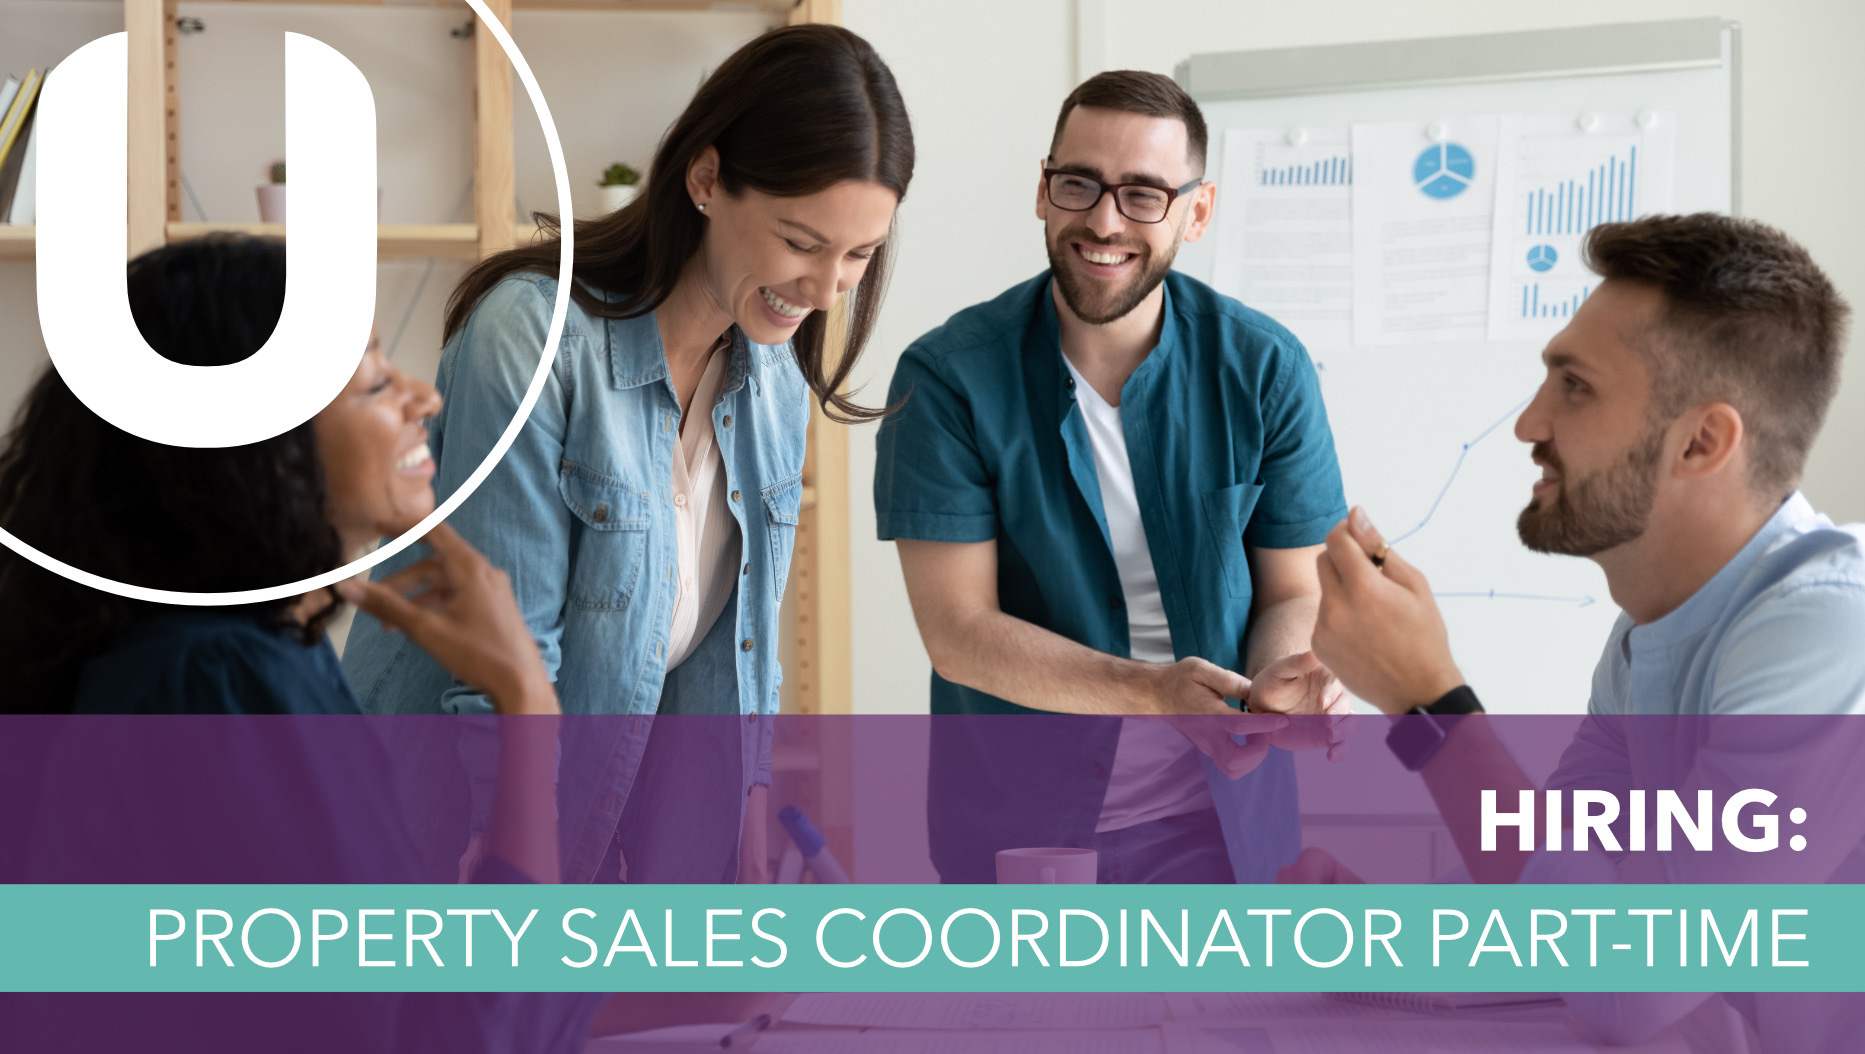 Hiring: Property Sales Coordinator Part-Time - CLOSED